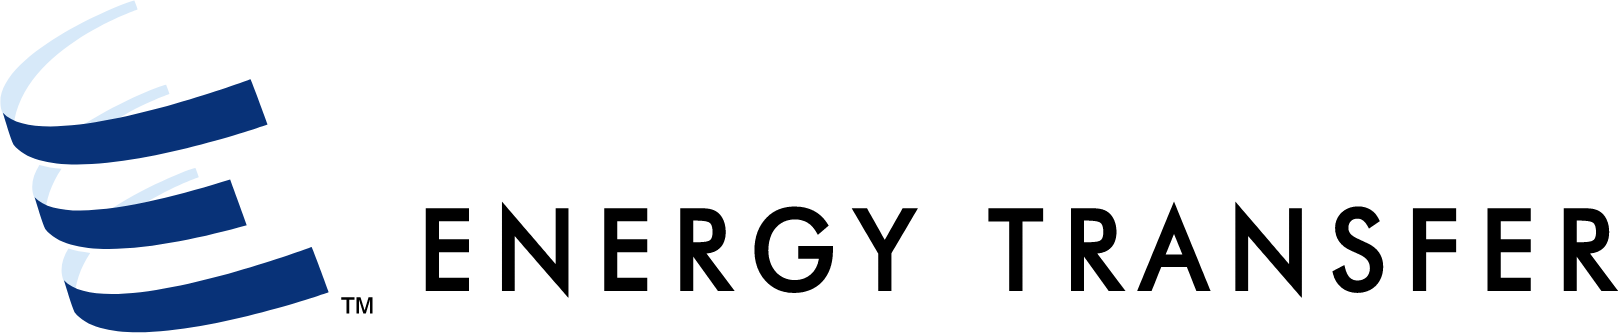 Energy Transfer Partners
 logo large (transparent PNG)